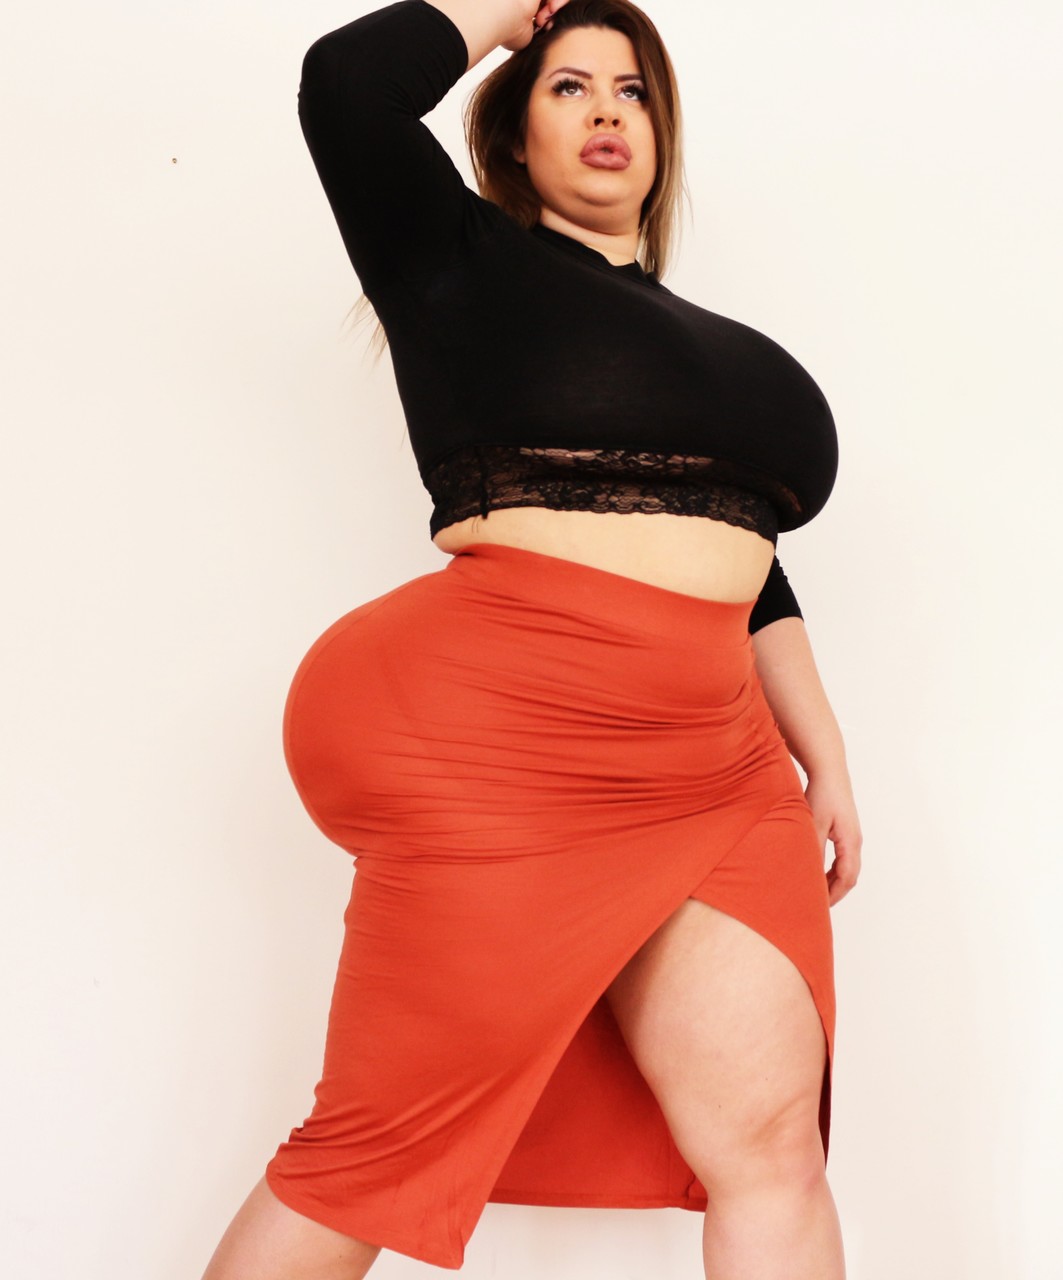 Stunning MILF fatty Natasha Crown flaunting her very big ass in a tight skirt 色情照片 #423816656 | Natasha Crown Pics, Natasha Crown, BBW, 手机色情